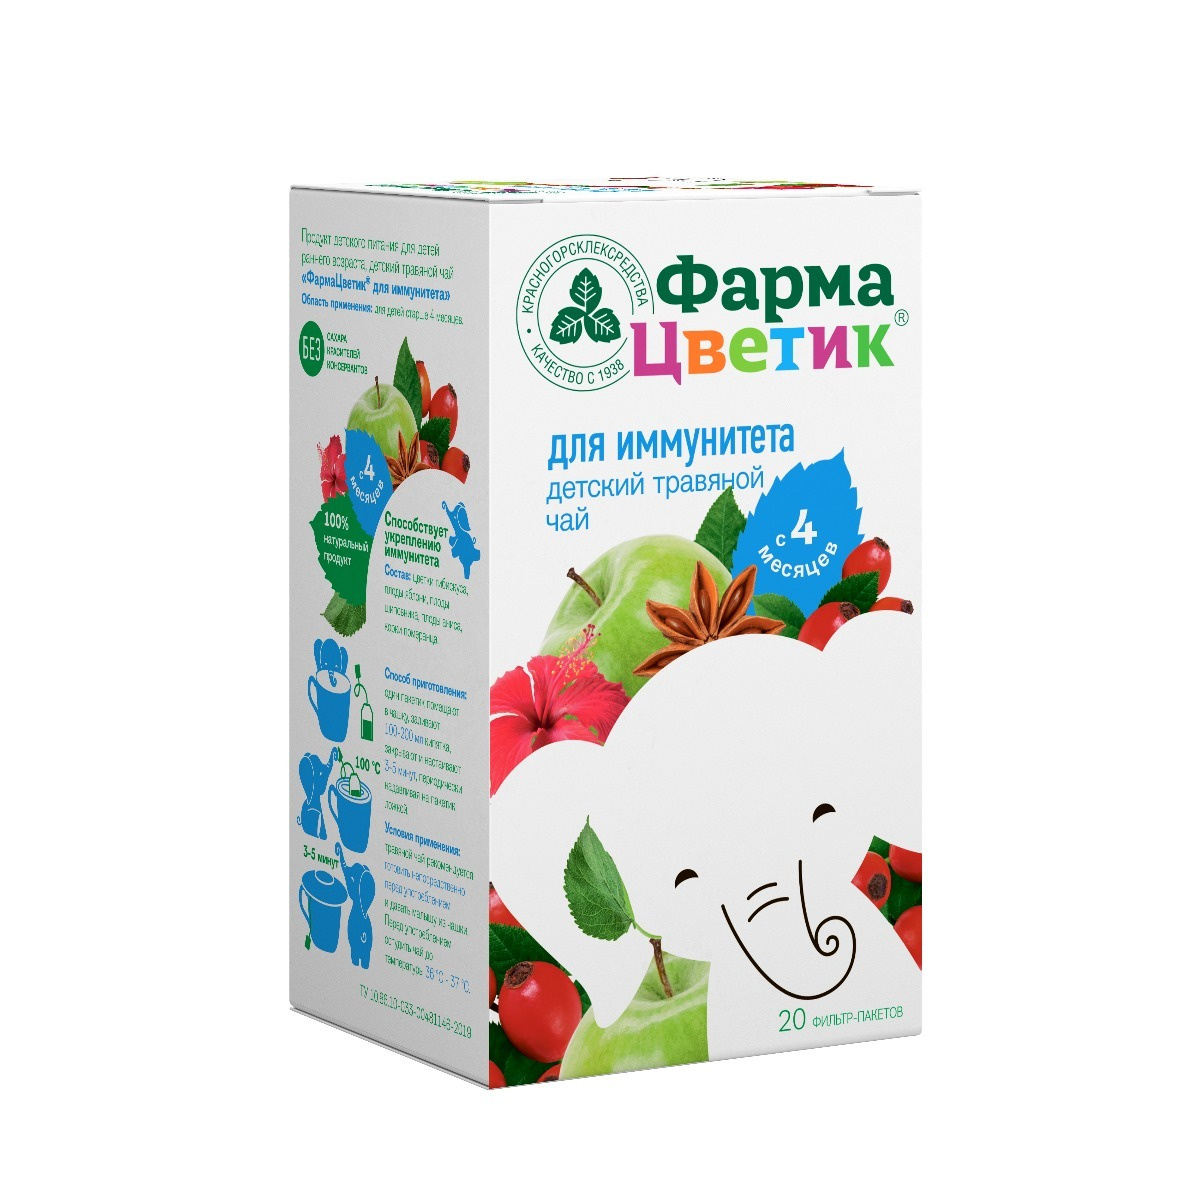 Детский травяной чай "ФармаЦветик для иммунитета" 20х1,5 гр.  #1